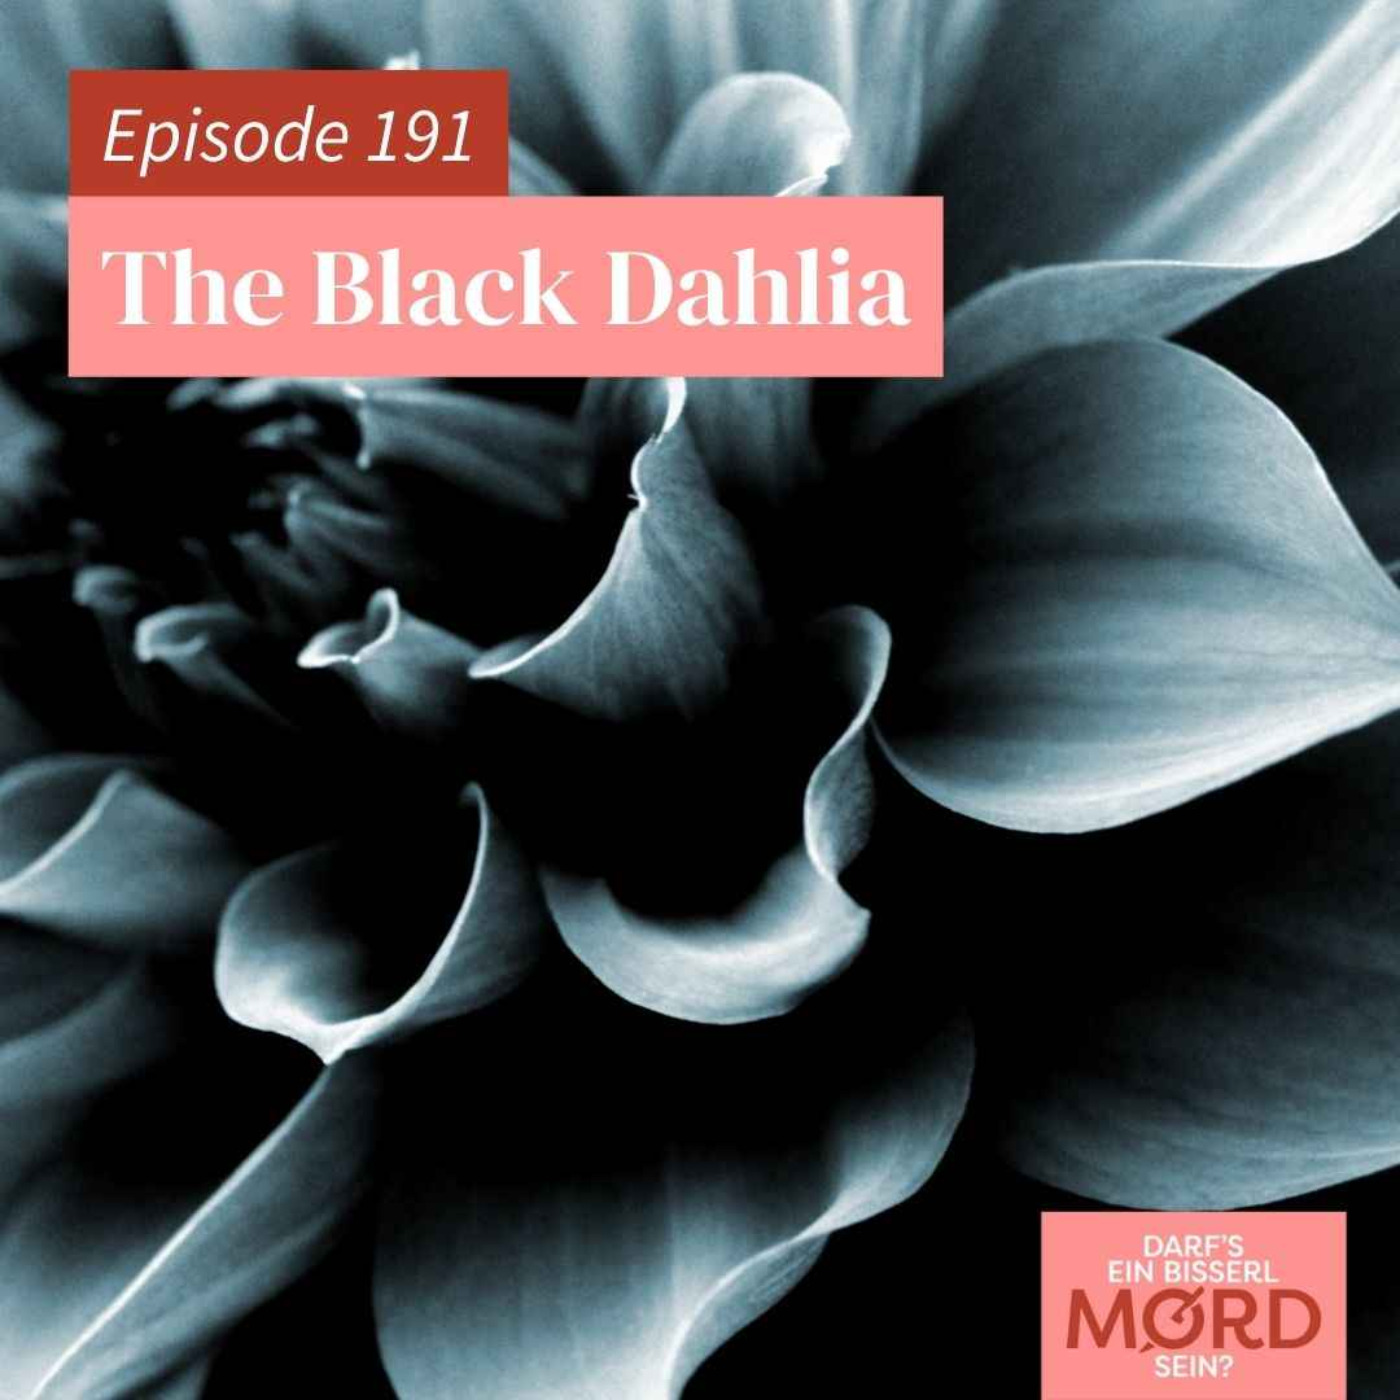 Episode 191: The Black Dahlia (1/2)